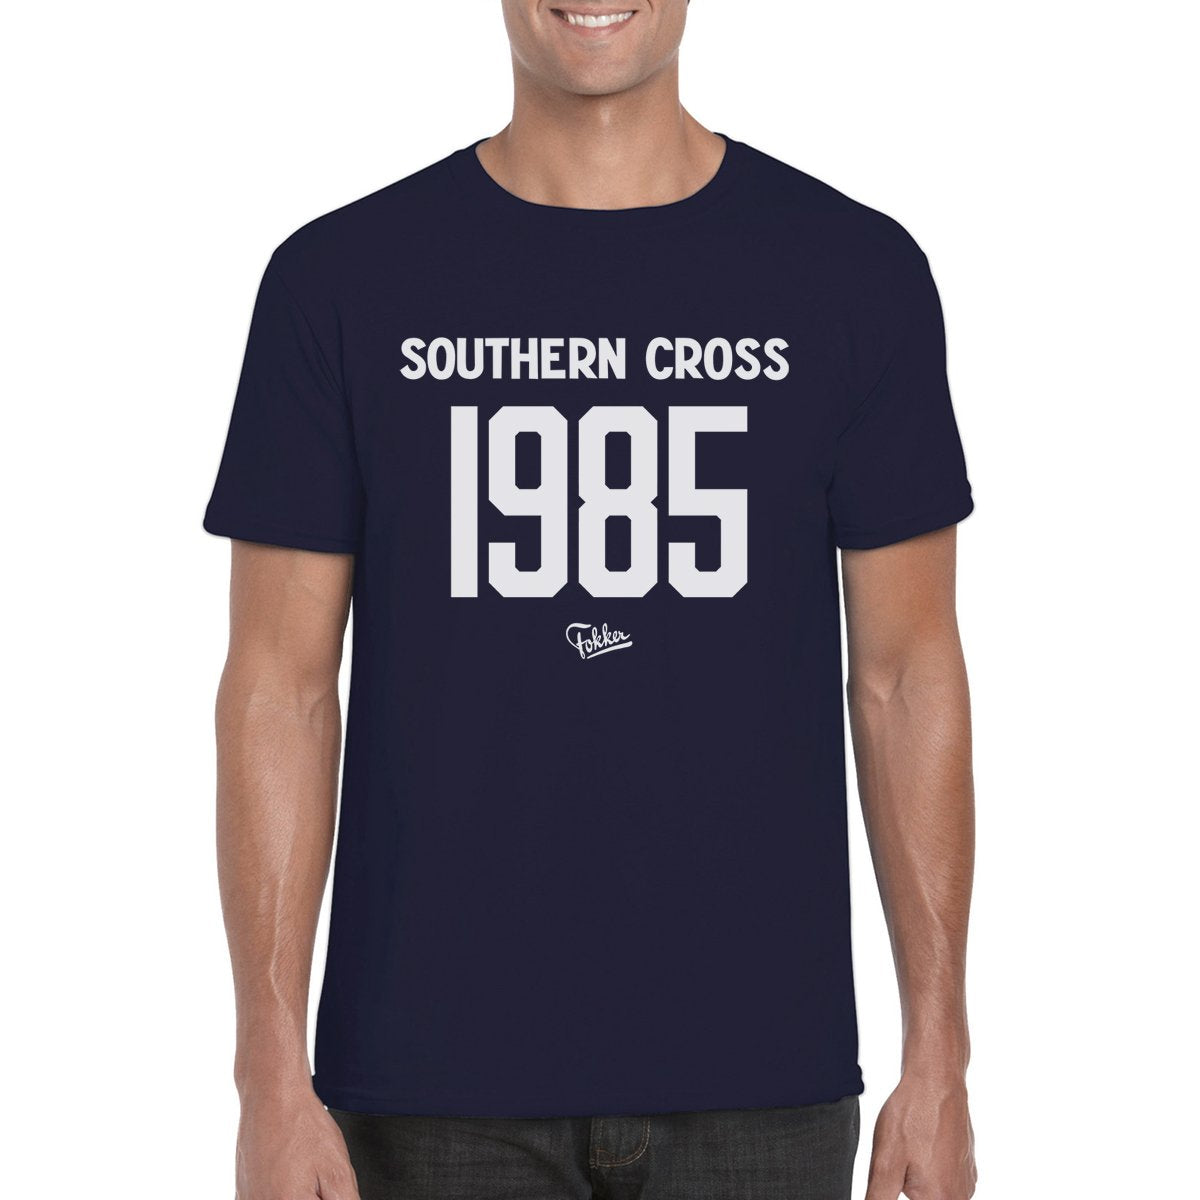 SOUTHERN CROSS - FOKKER T-Shirt